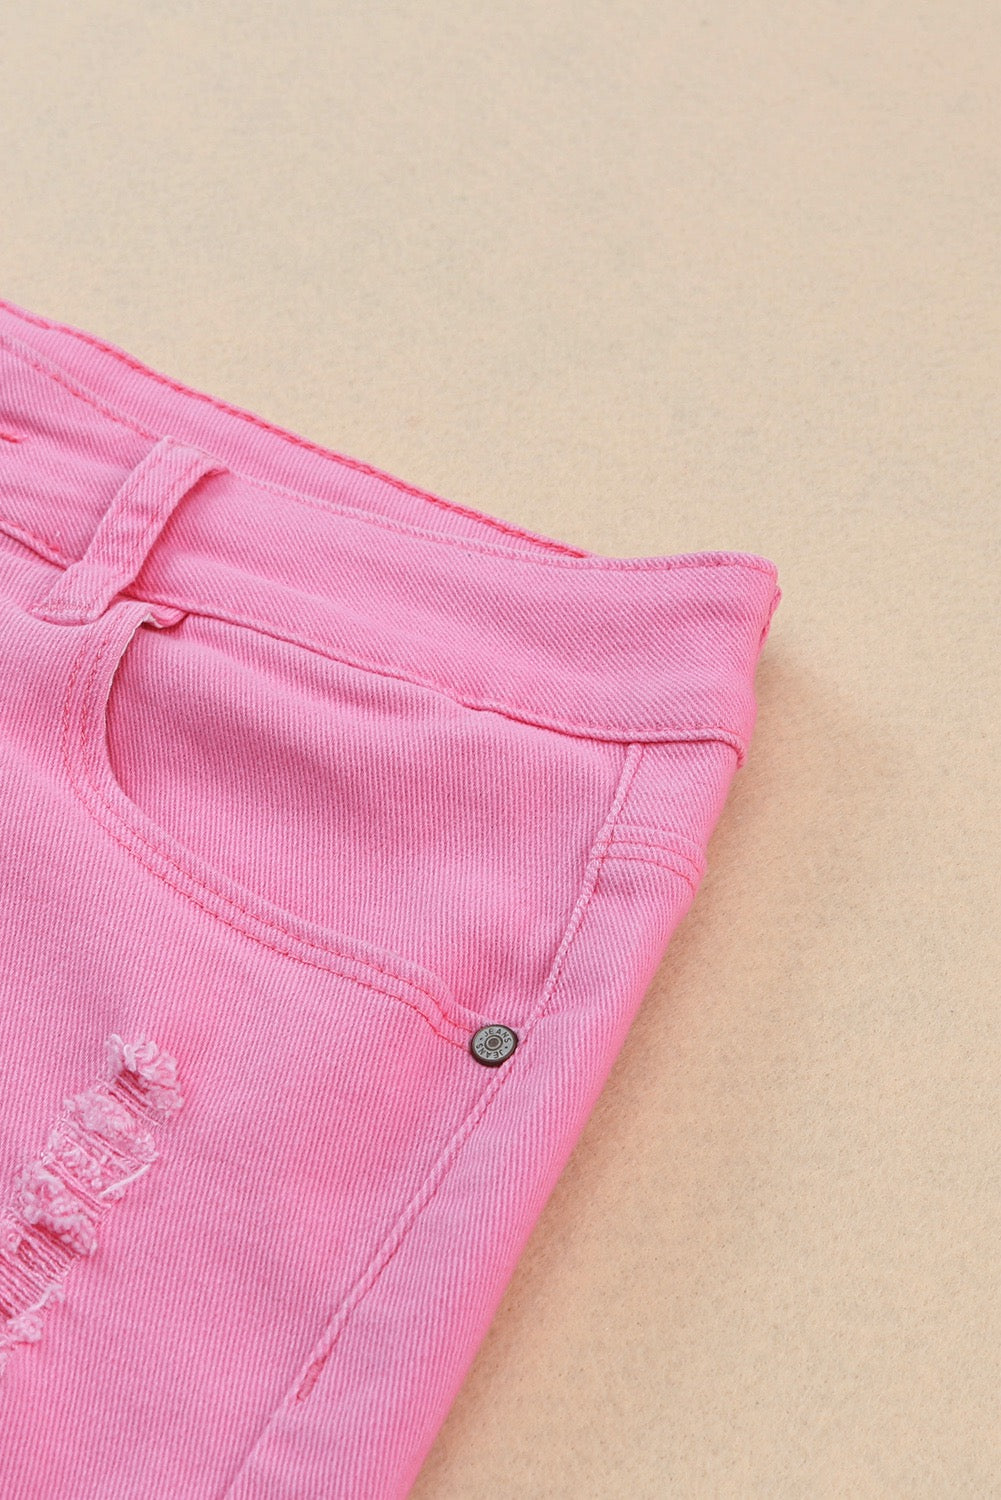 Pink denim shorts